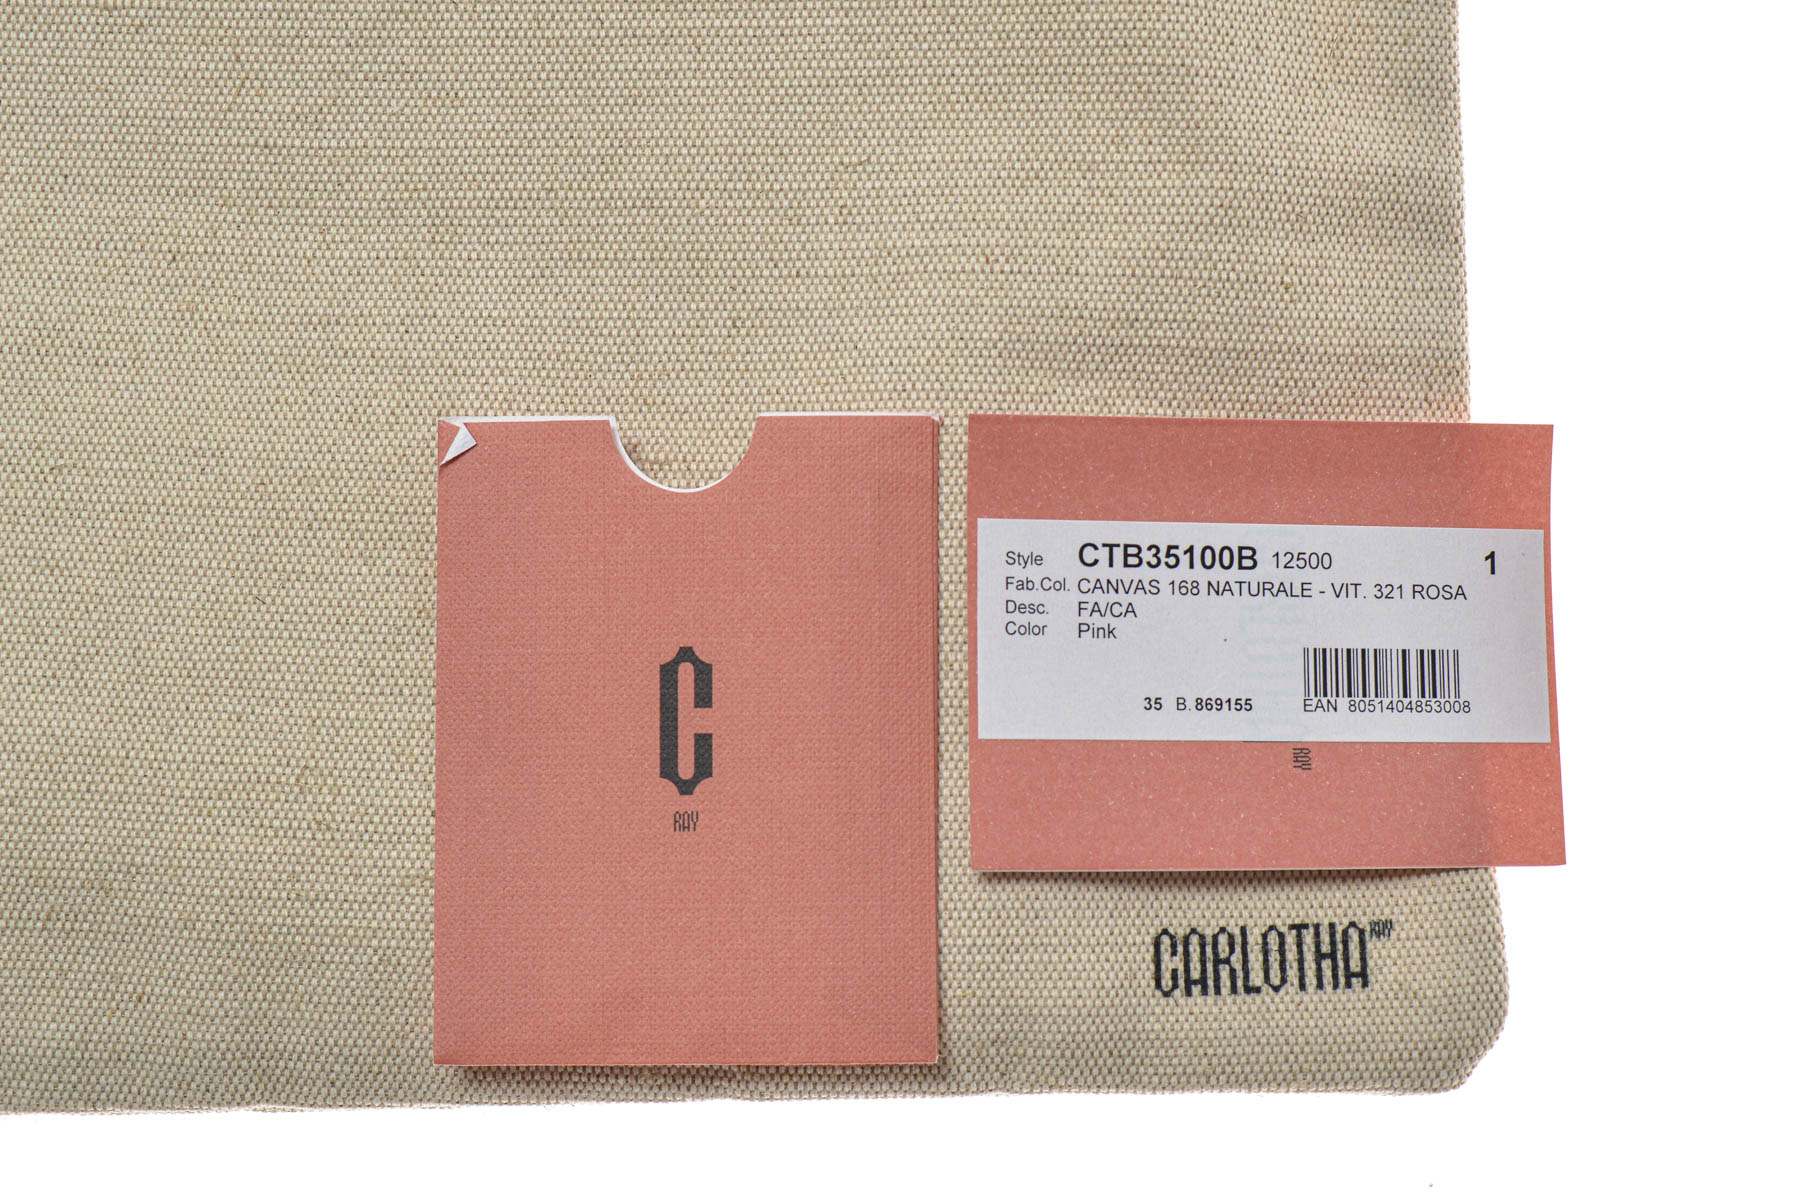 Shopping bag - Carlotha Ray - 3